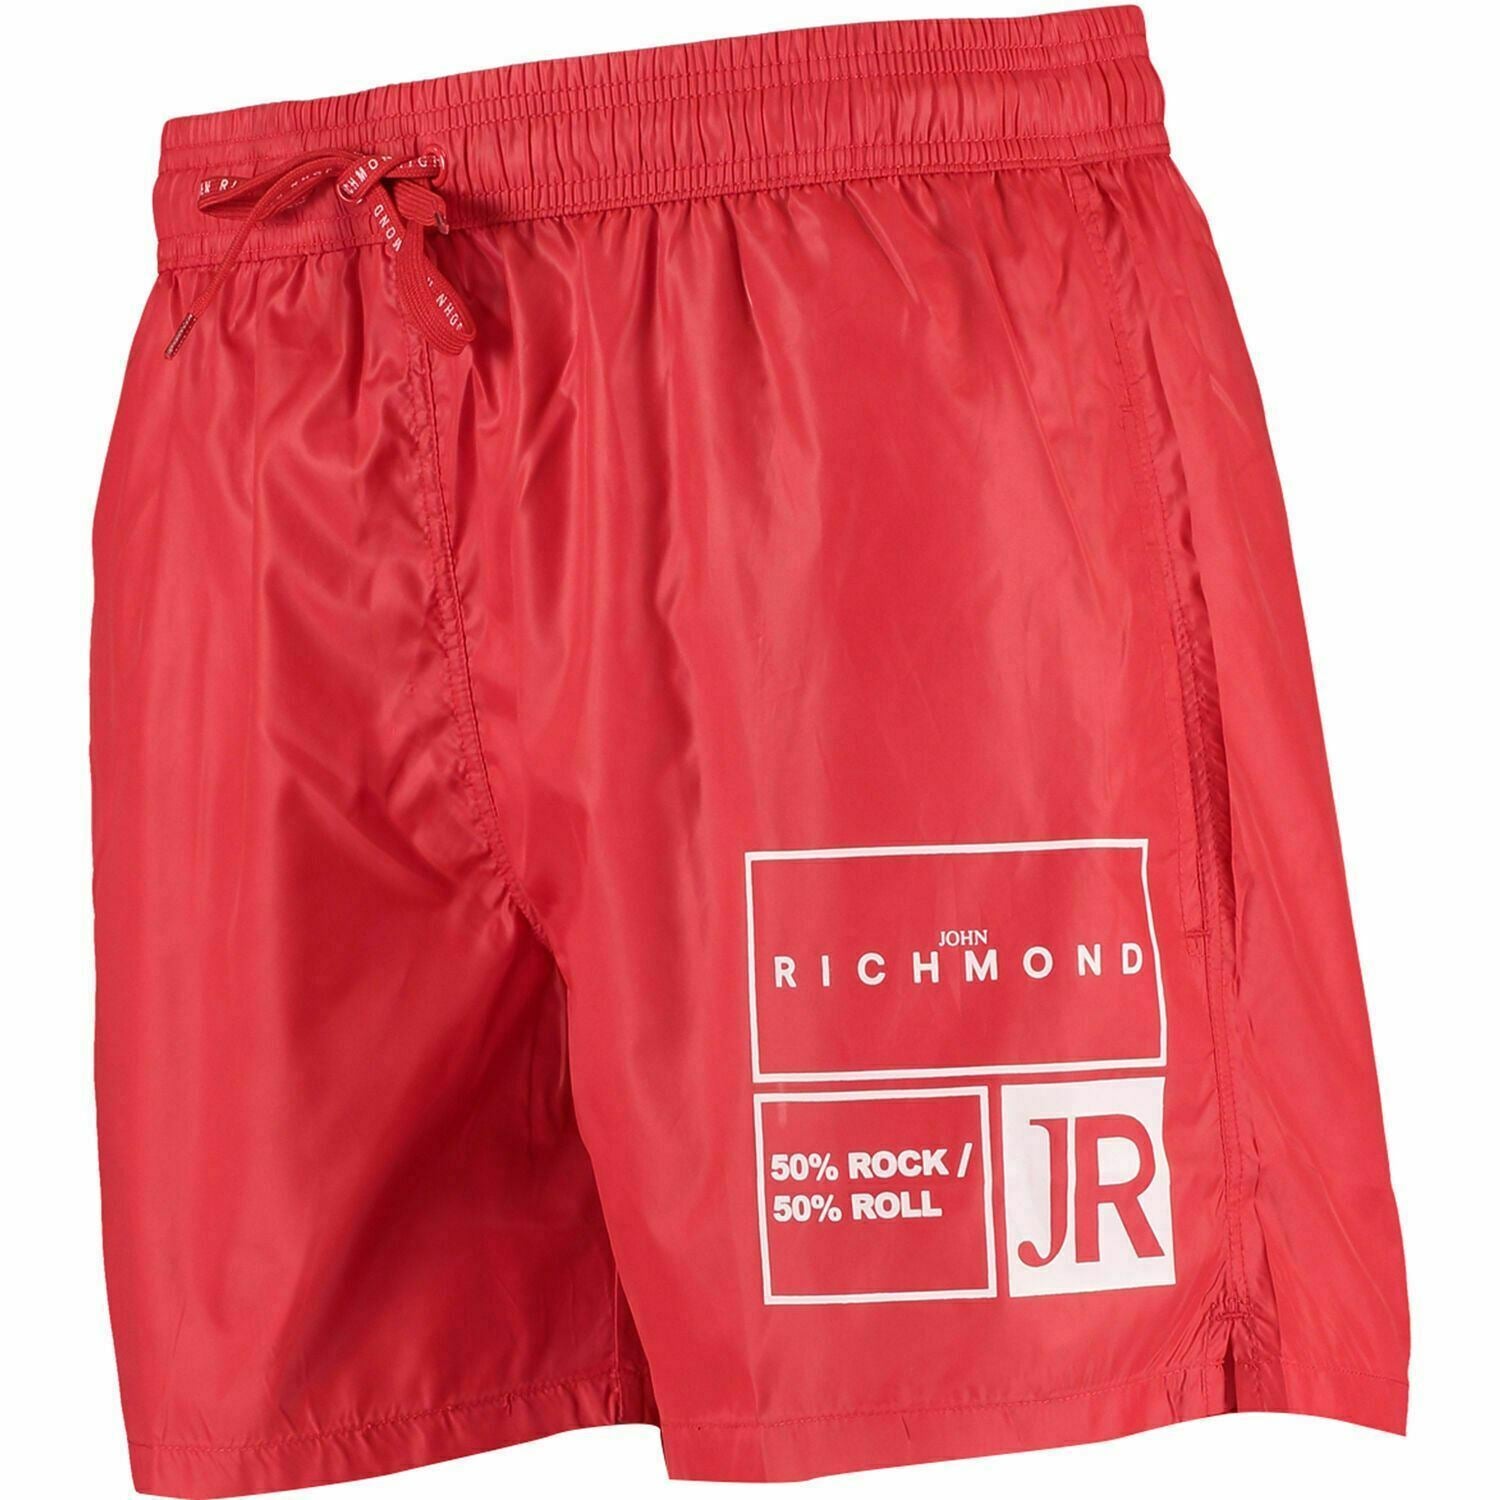 JOHN RICHMOND Men's Swimboxer OLIMPO Swim Shorts, Tomato Red, size S